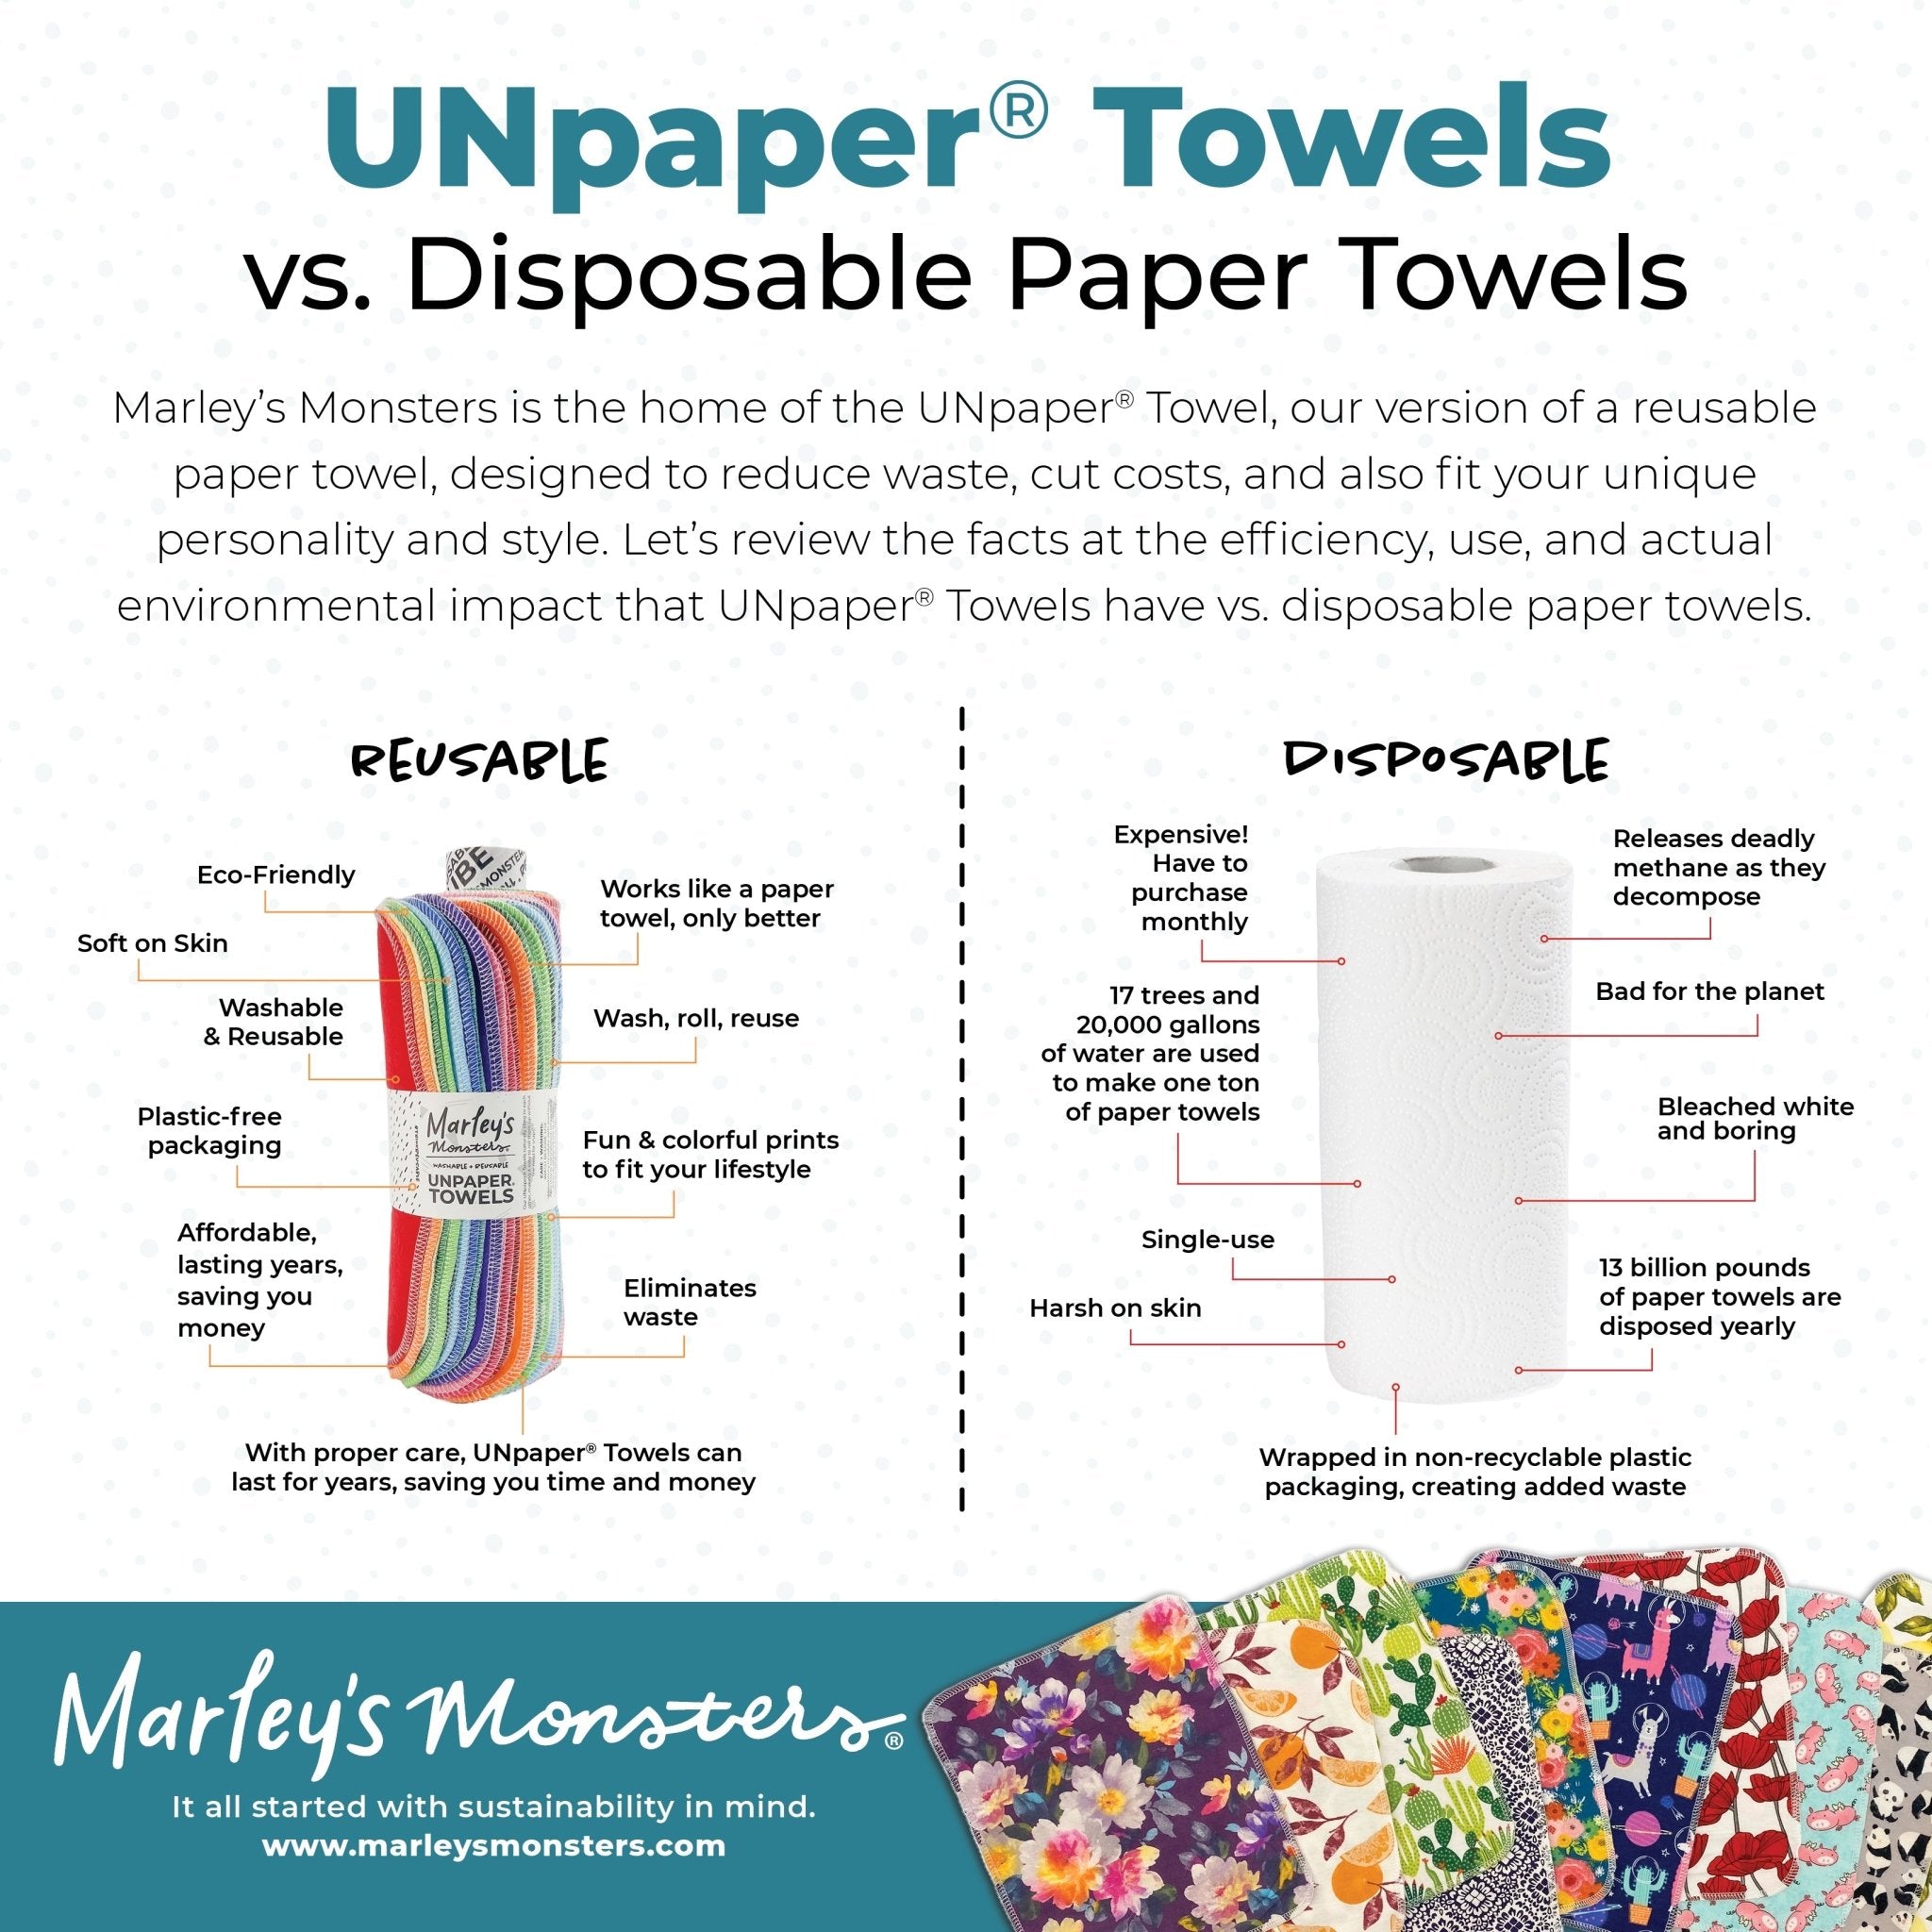 UNpaper® Towels: Charmed